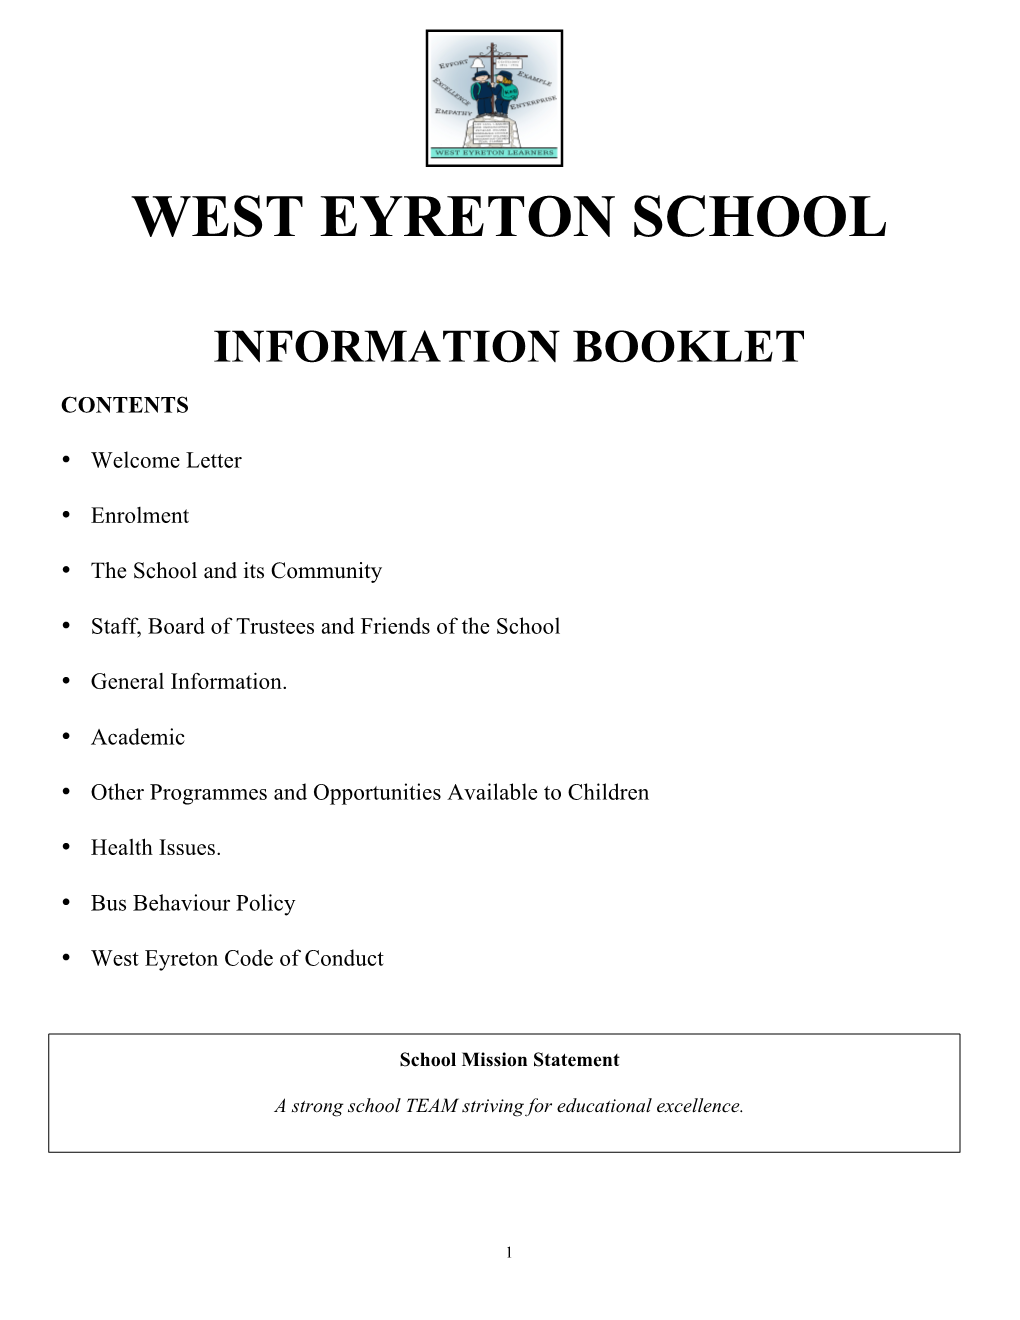 School Information Book Updated 27 March 2017